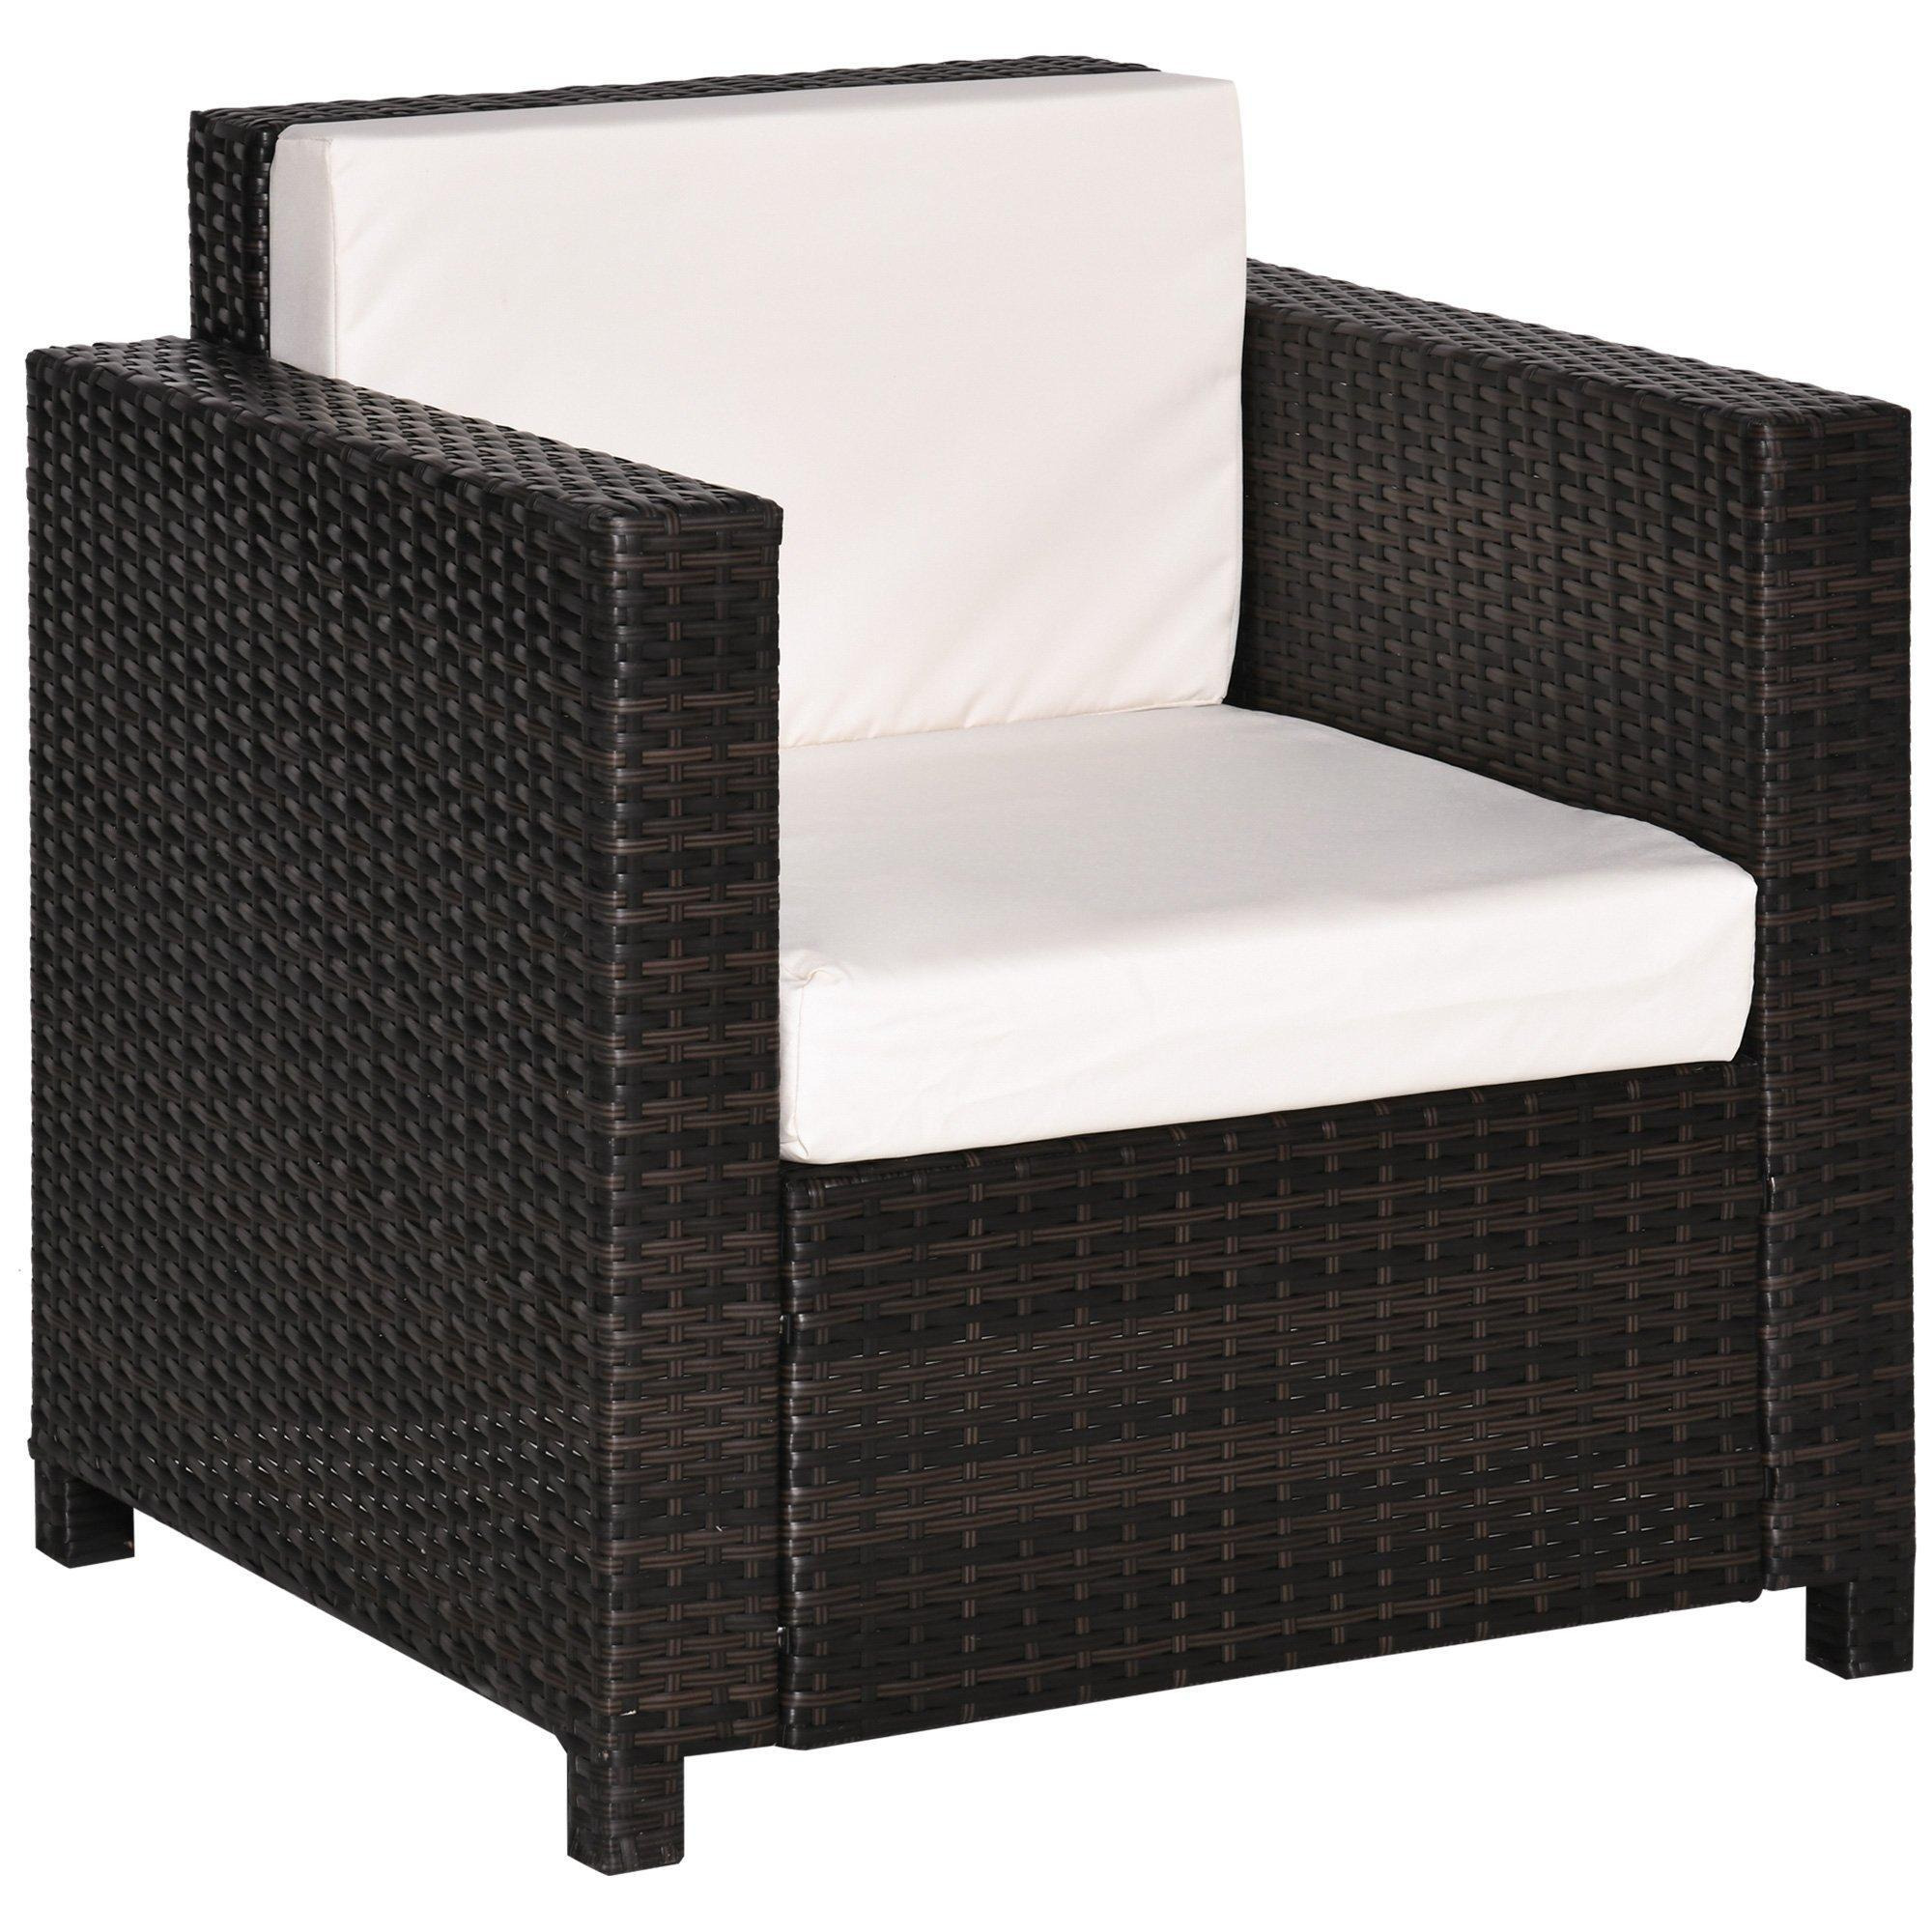 Rattan Garden Furniture Weave Wicker 1 Seater Sofa with Cushion - image 1